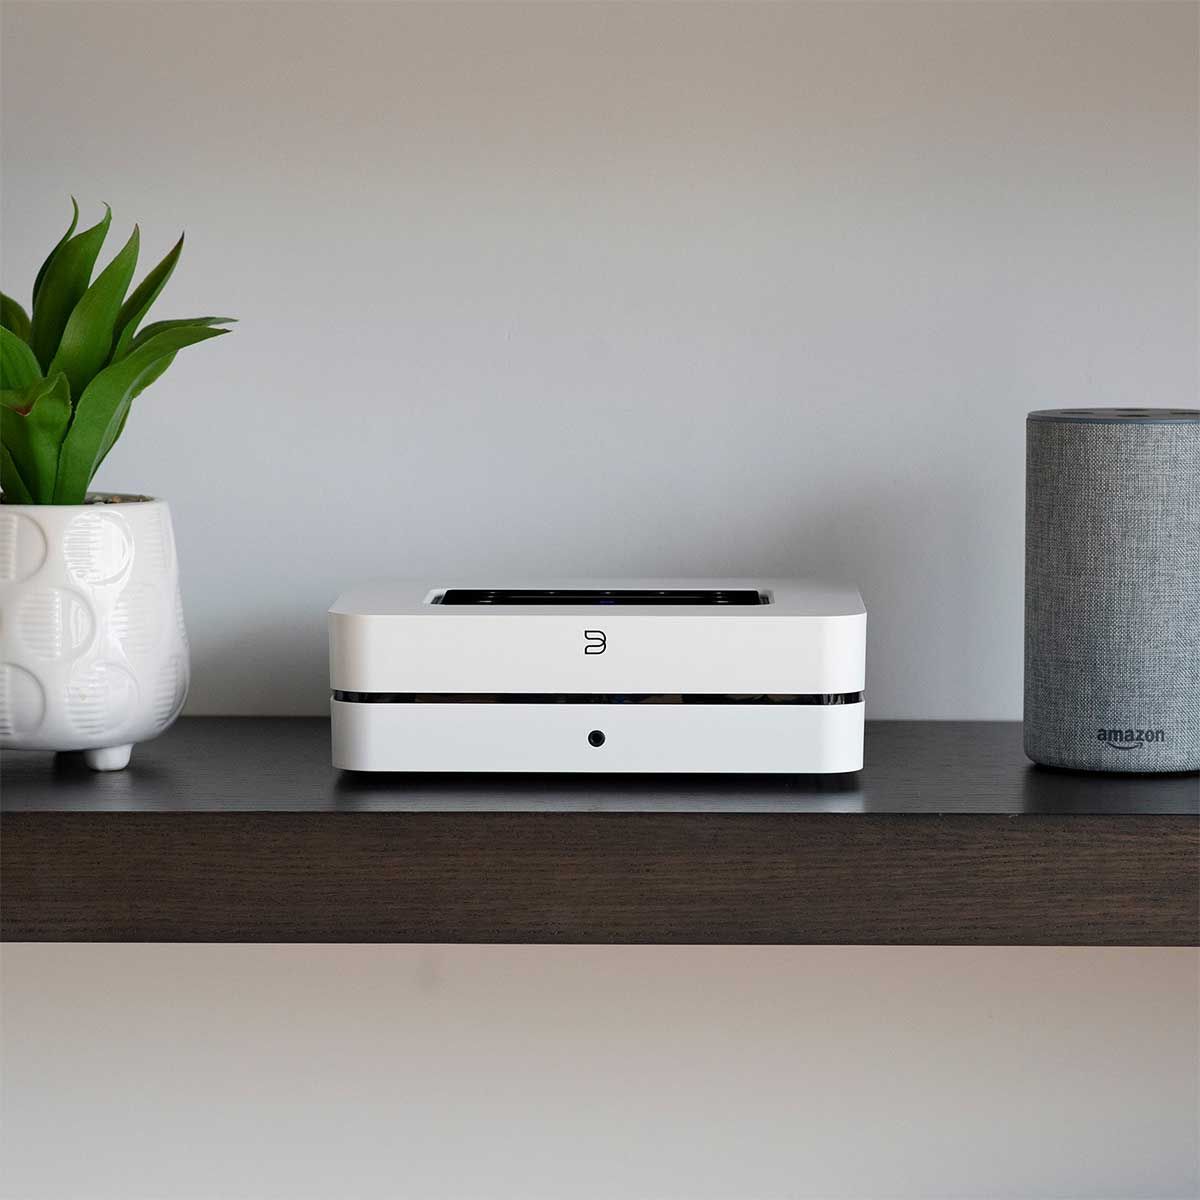 Bluesound PowerNode Wireless Music Streaming Amplifier, White, on dark wood shelf between a plant and Amazon Alexa speaker